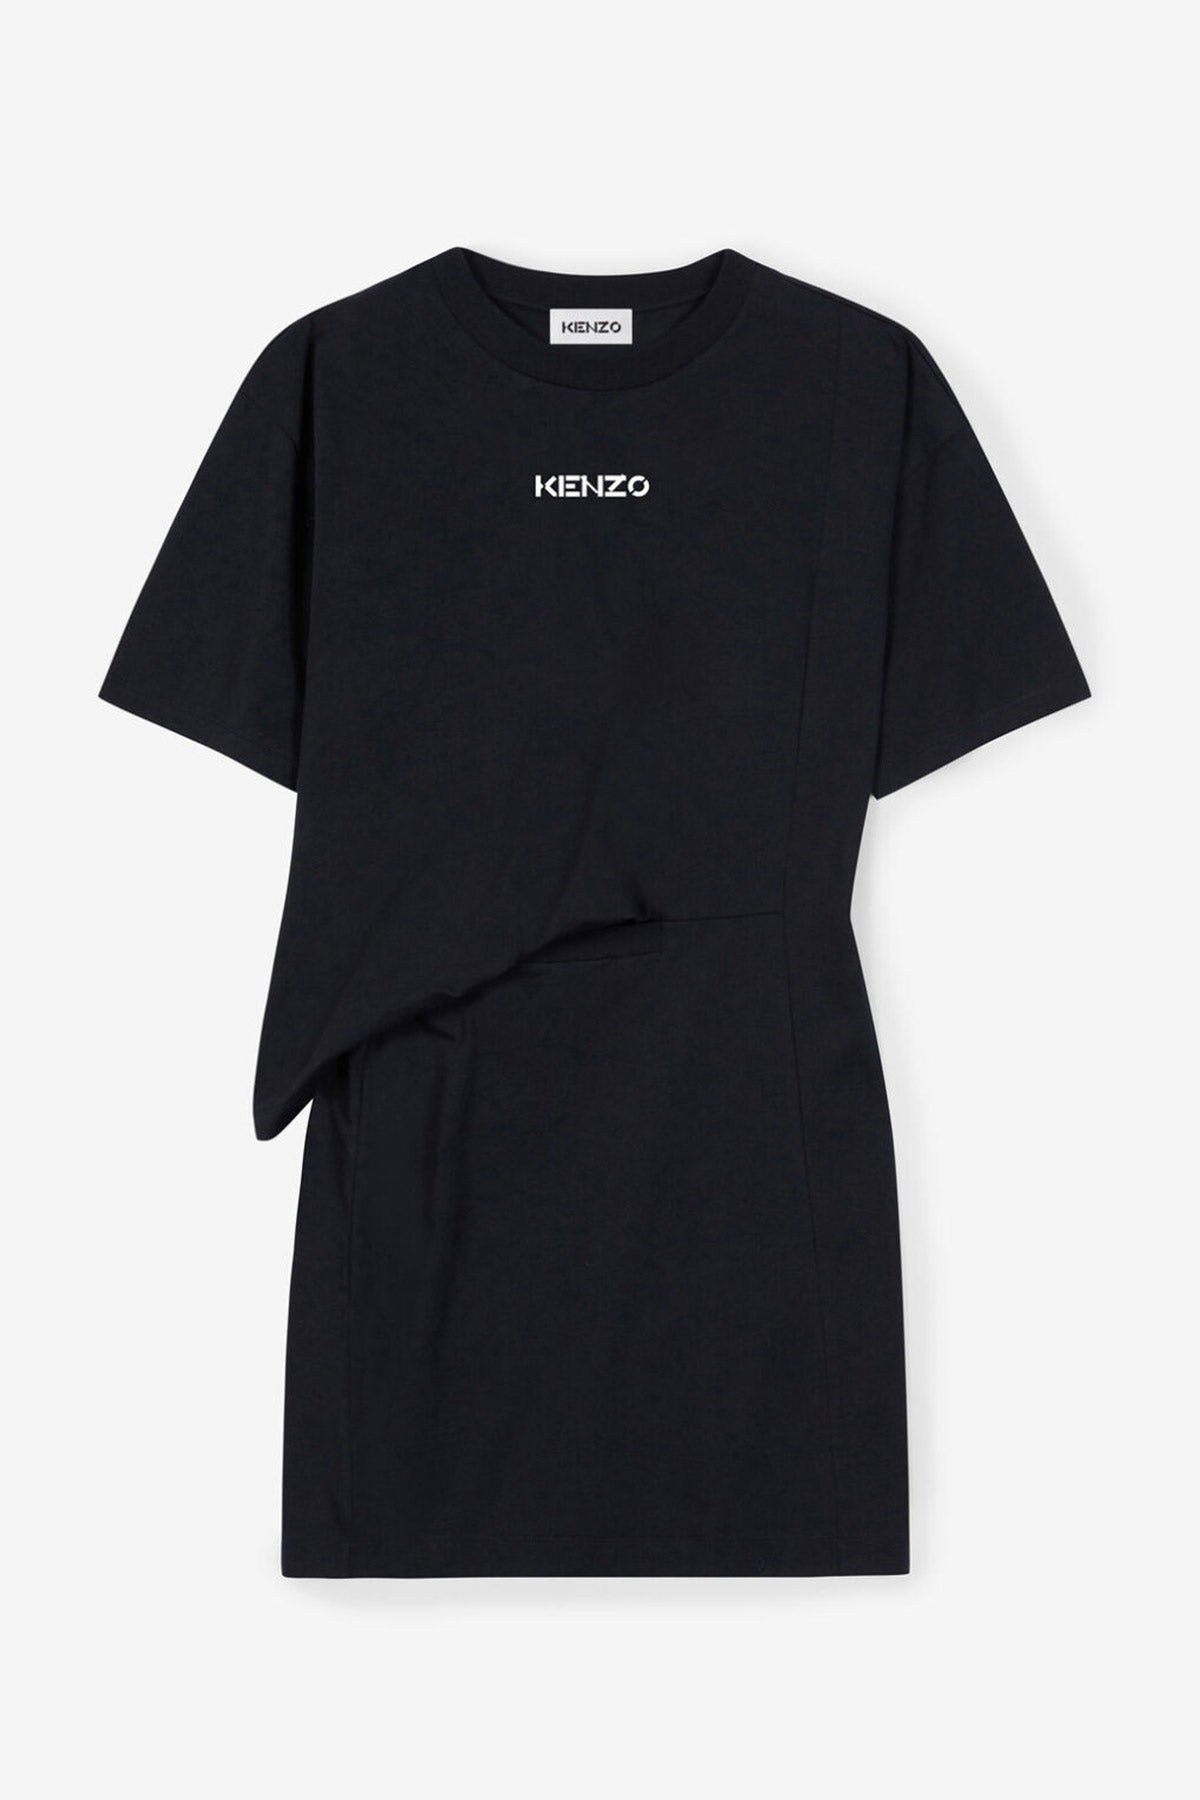 Kenzo Drapeli T-Shirt Elbise-Libas Trendy Fashion Store